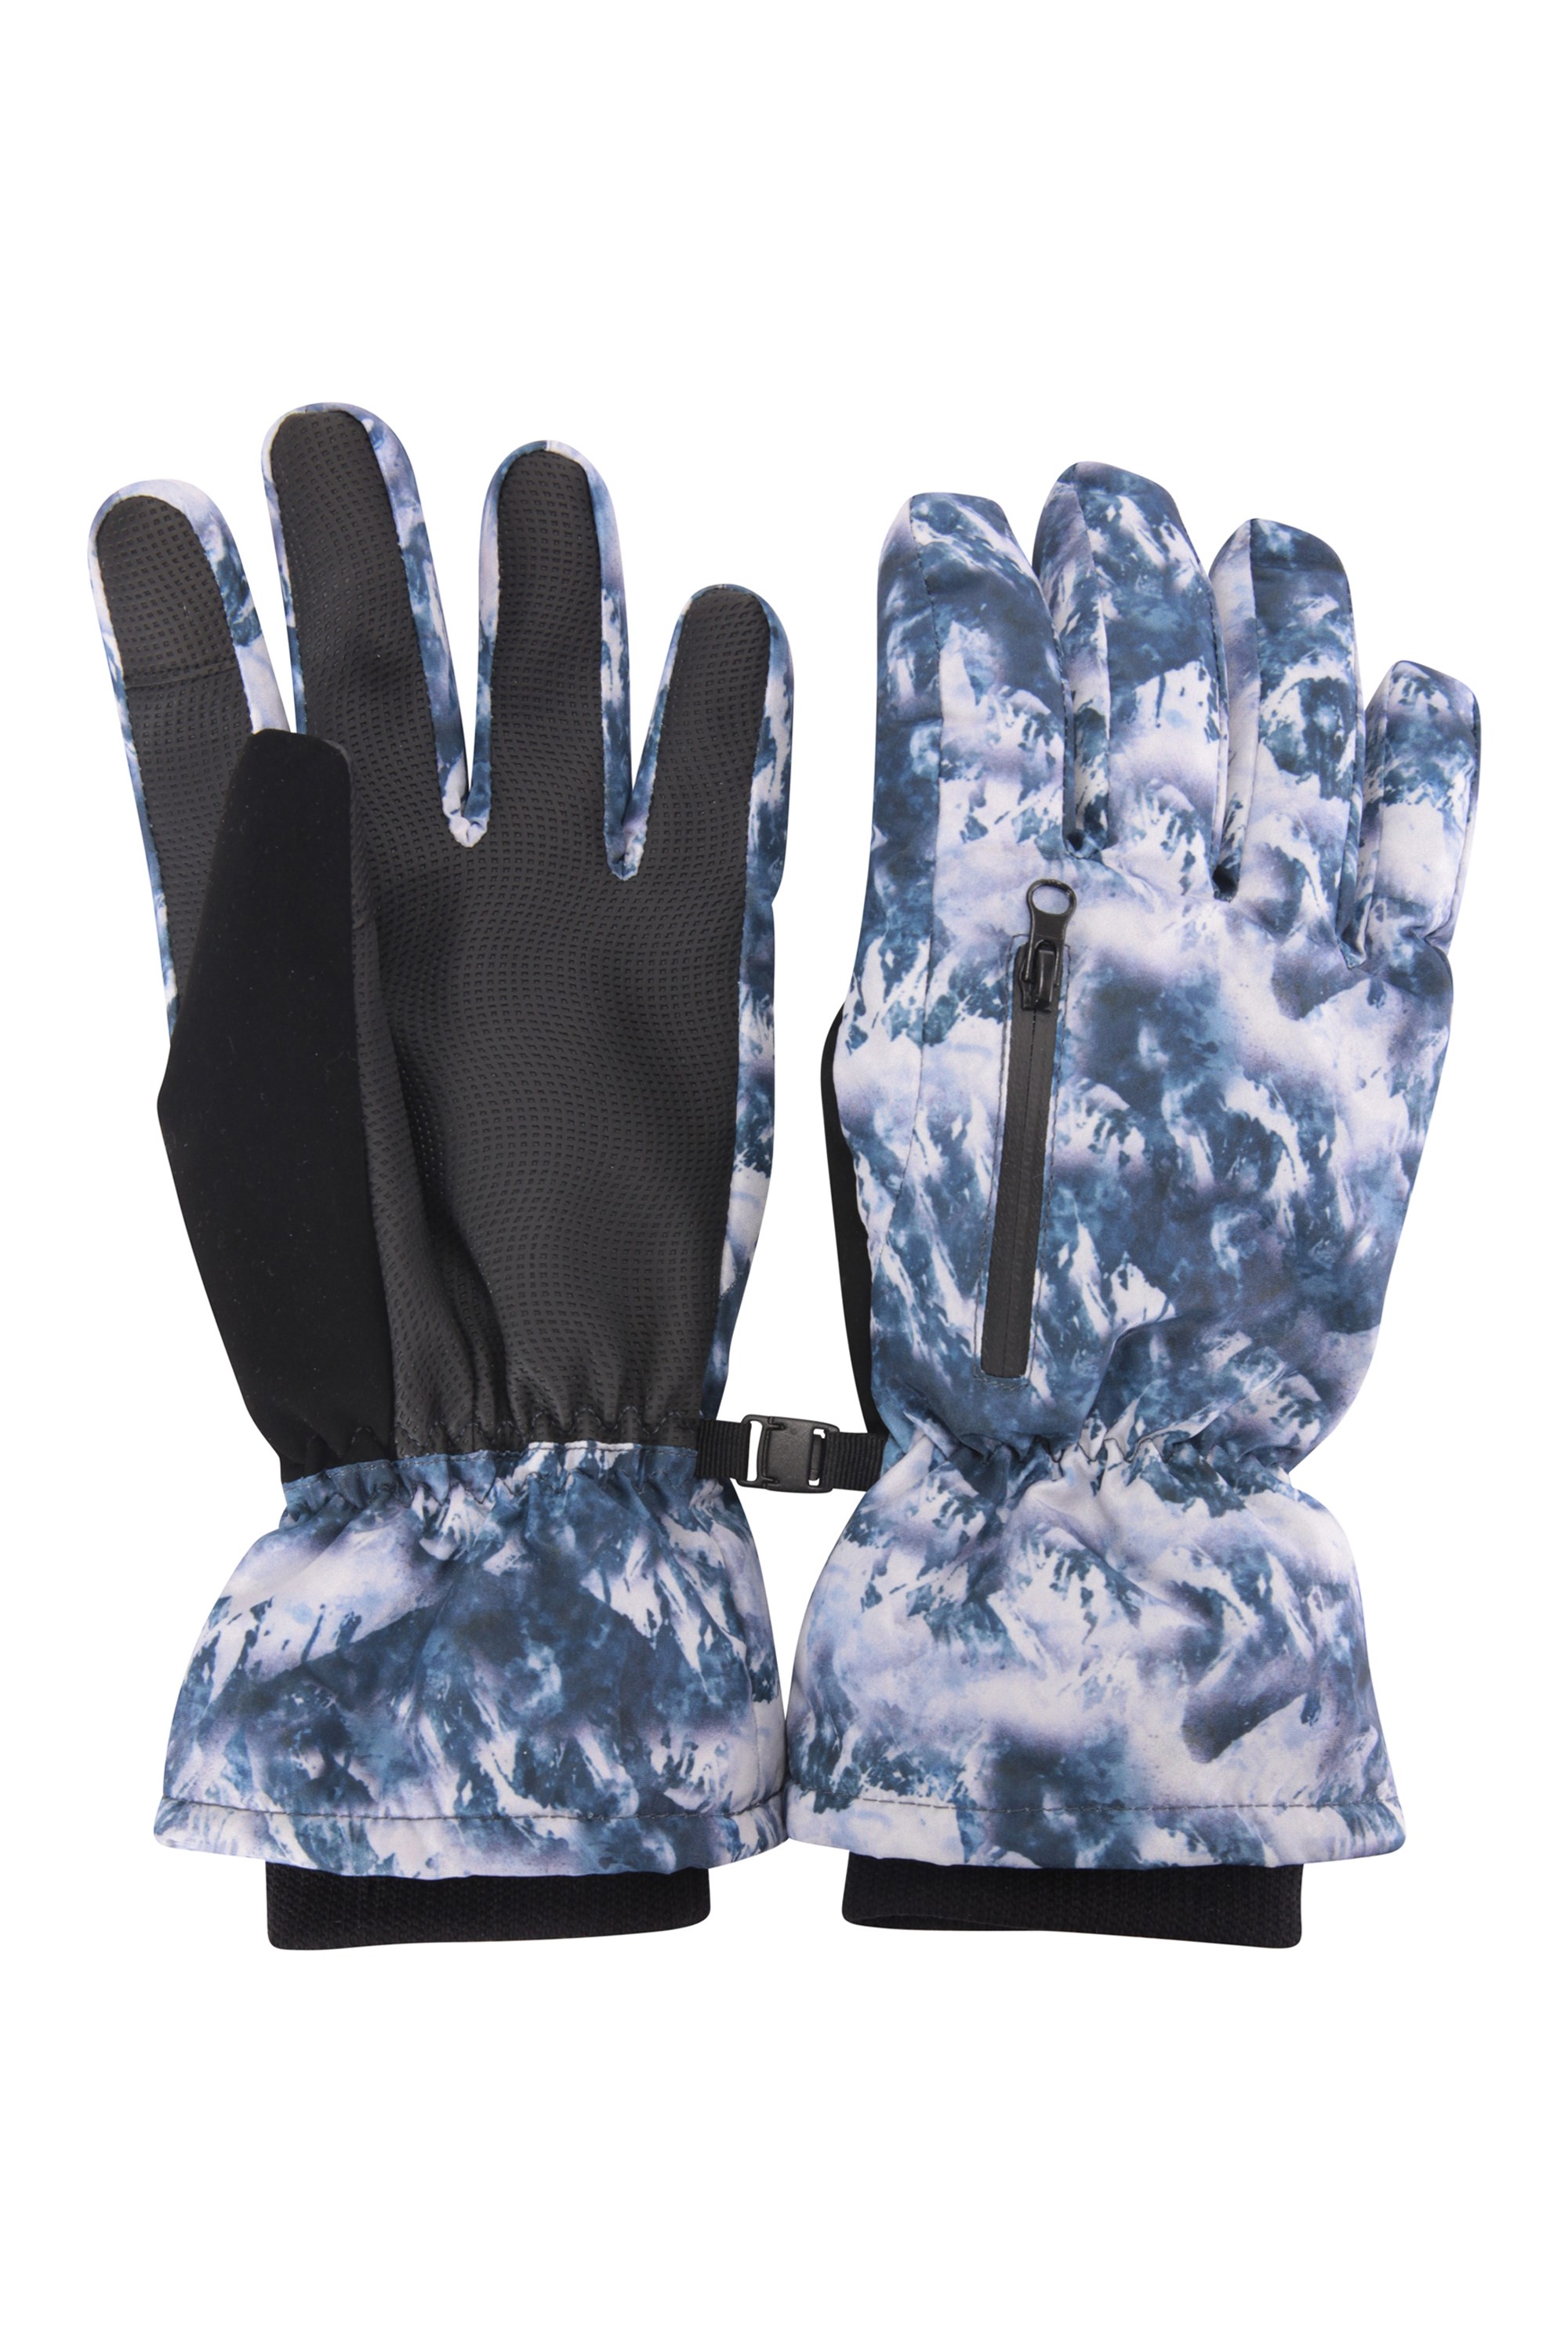 Mountain Warehouse Wms Womens Silk Glove Gloves 